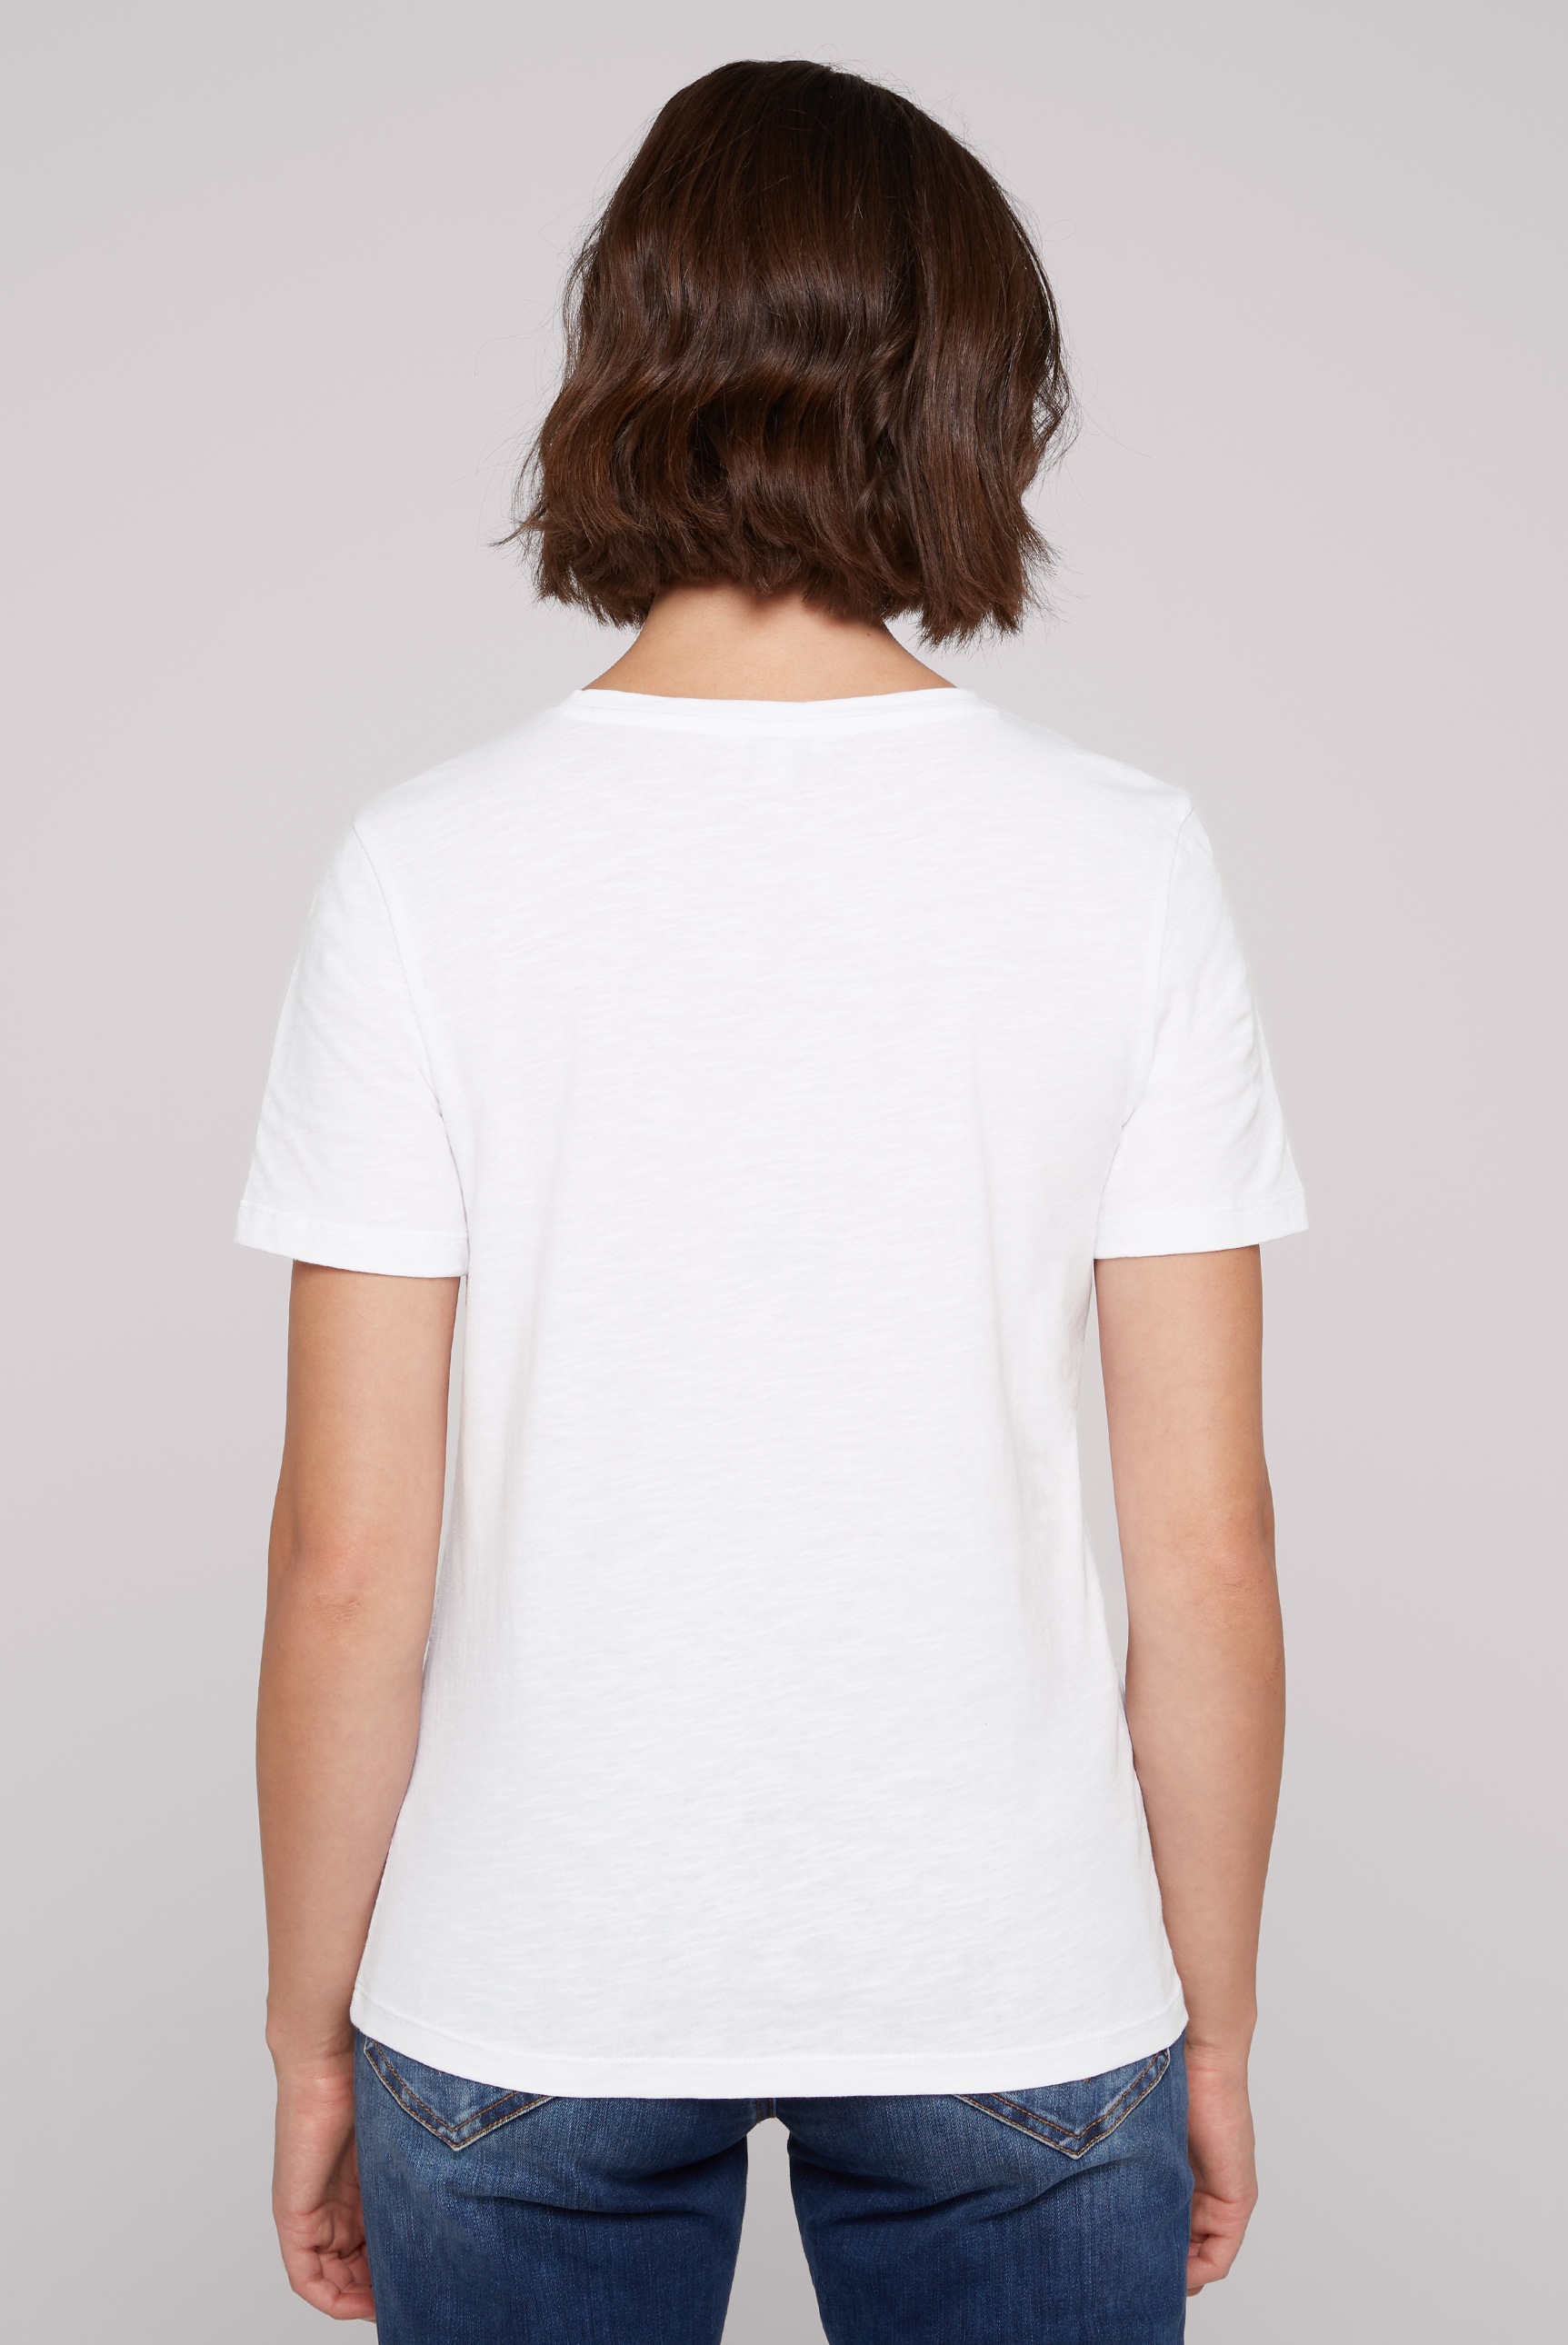 SOCCX V-Shirt, aus Baumwolle